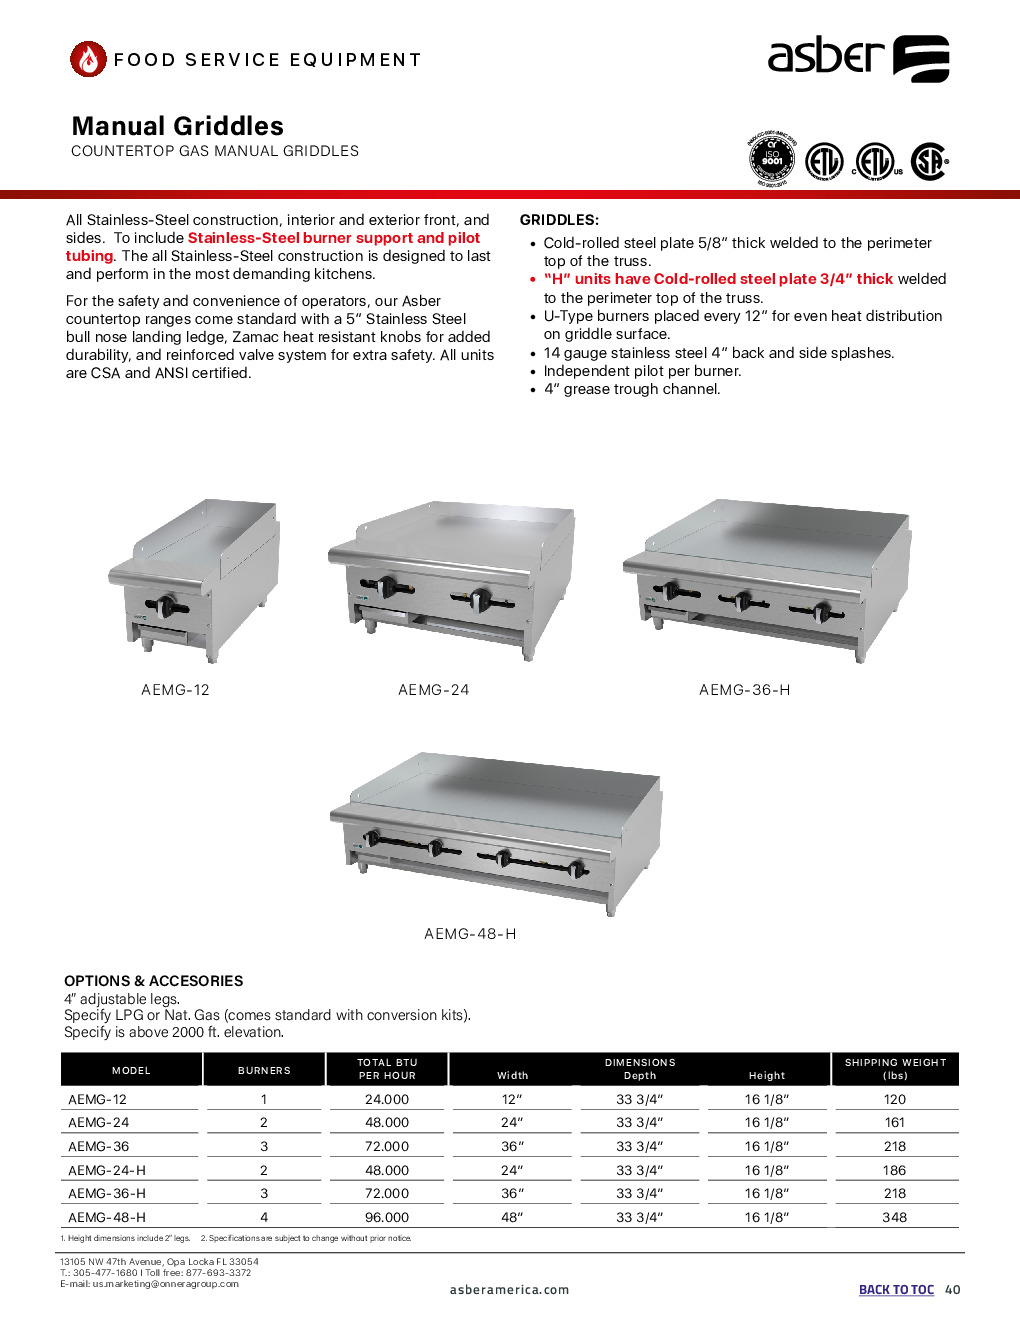 Asber AEMG-12 Countertop Gas Manual Griddle, 24,000 BTU - 12